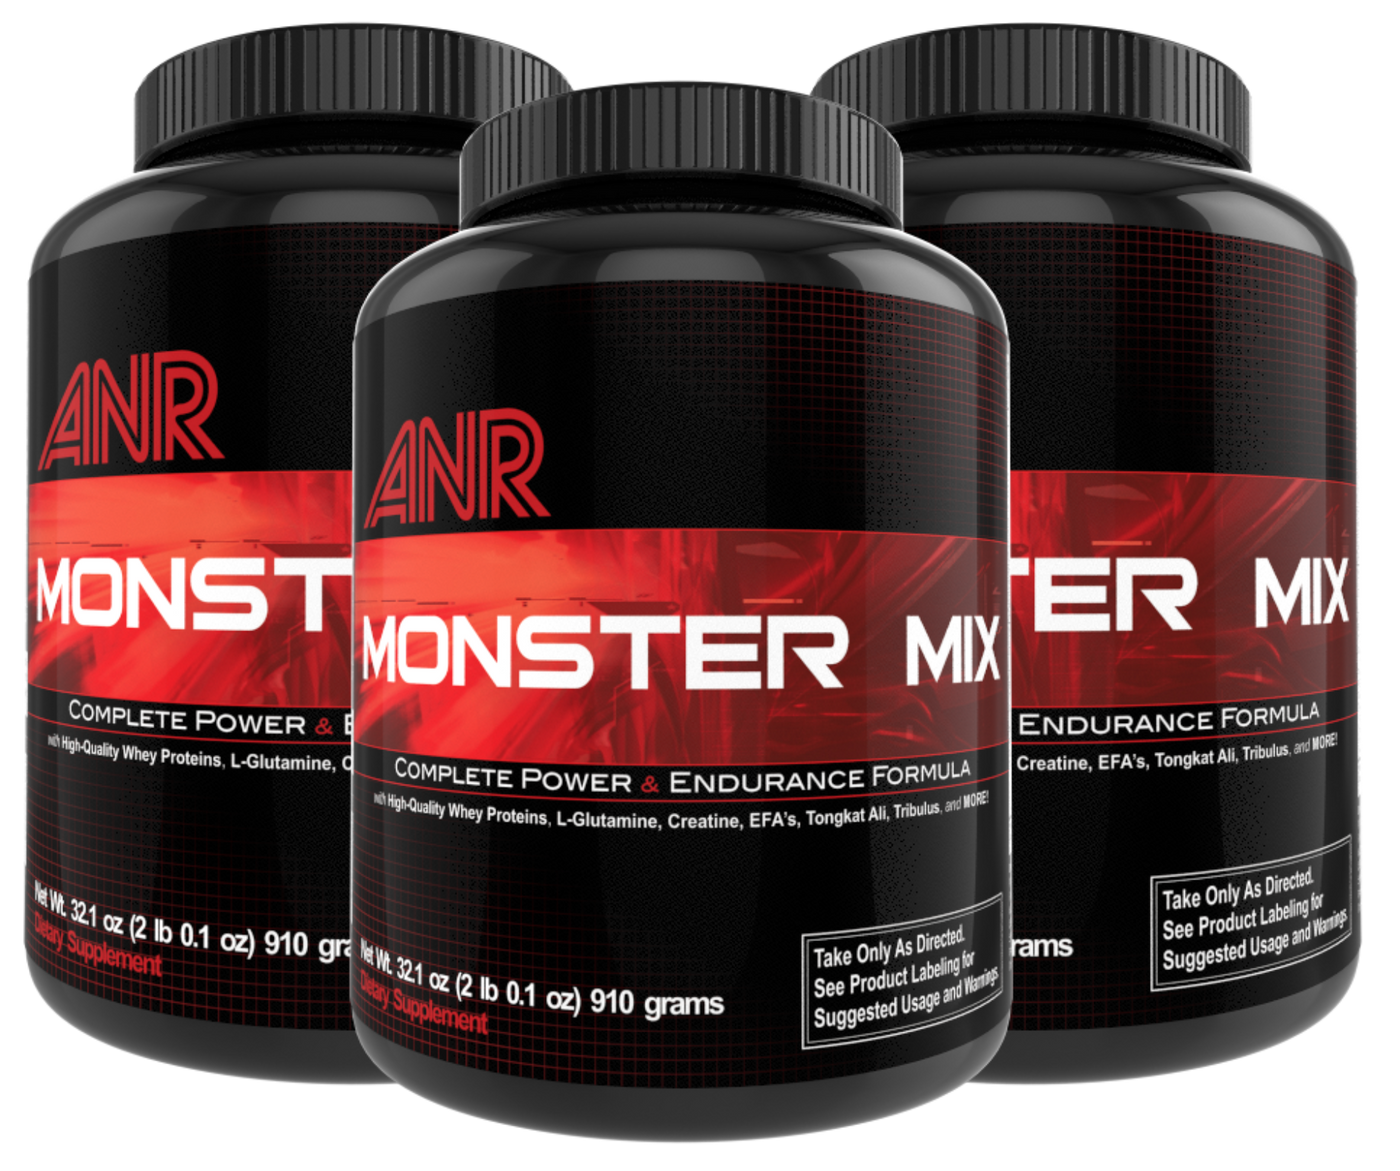 Monster Mix 3 Pack - TeamANR